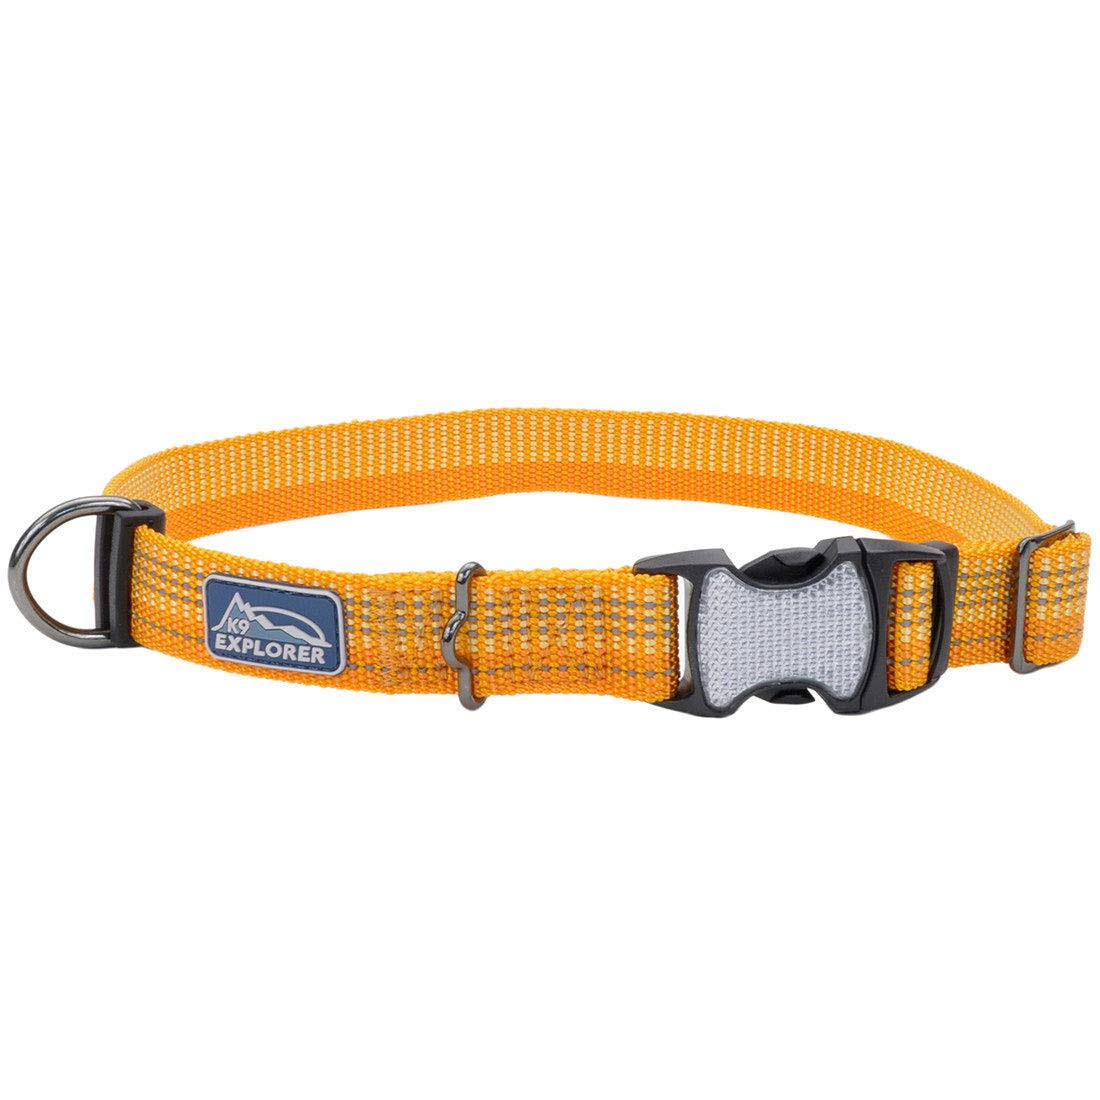 1 x 18-26-Inch Desert K9 Explorer Reflective Adjustable Dog Collar